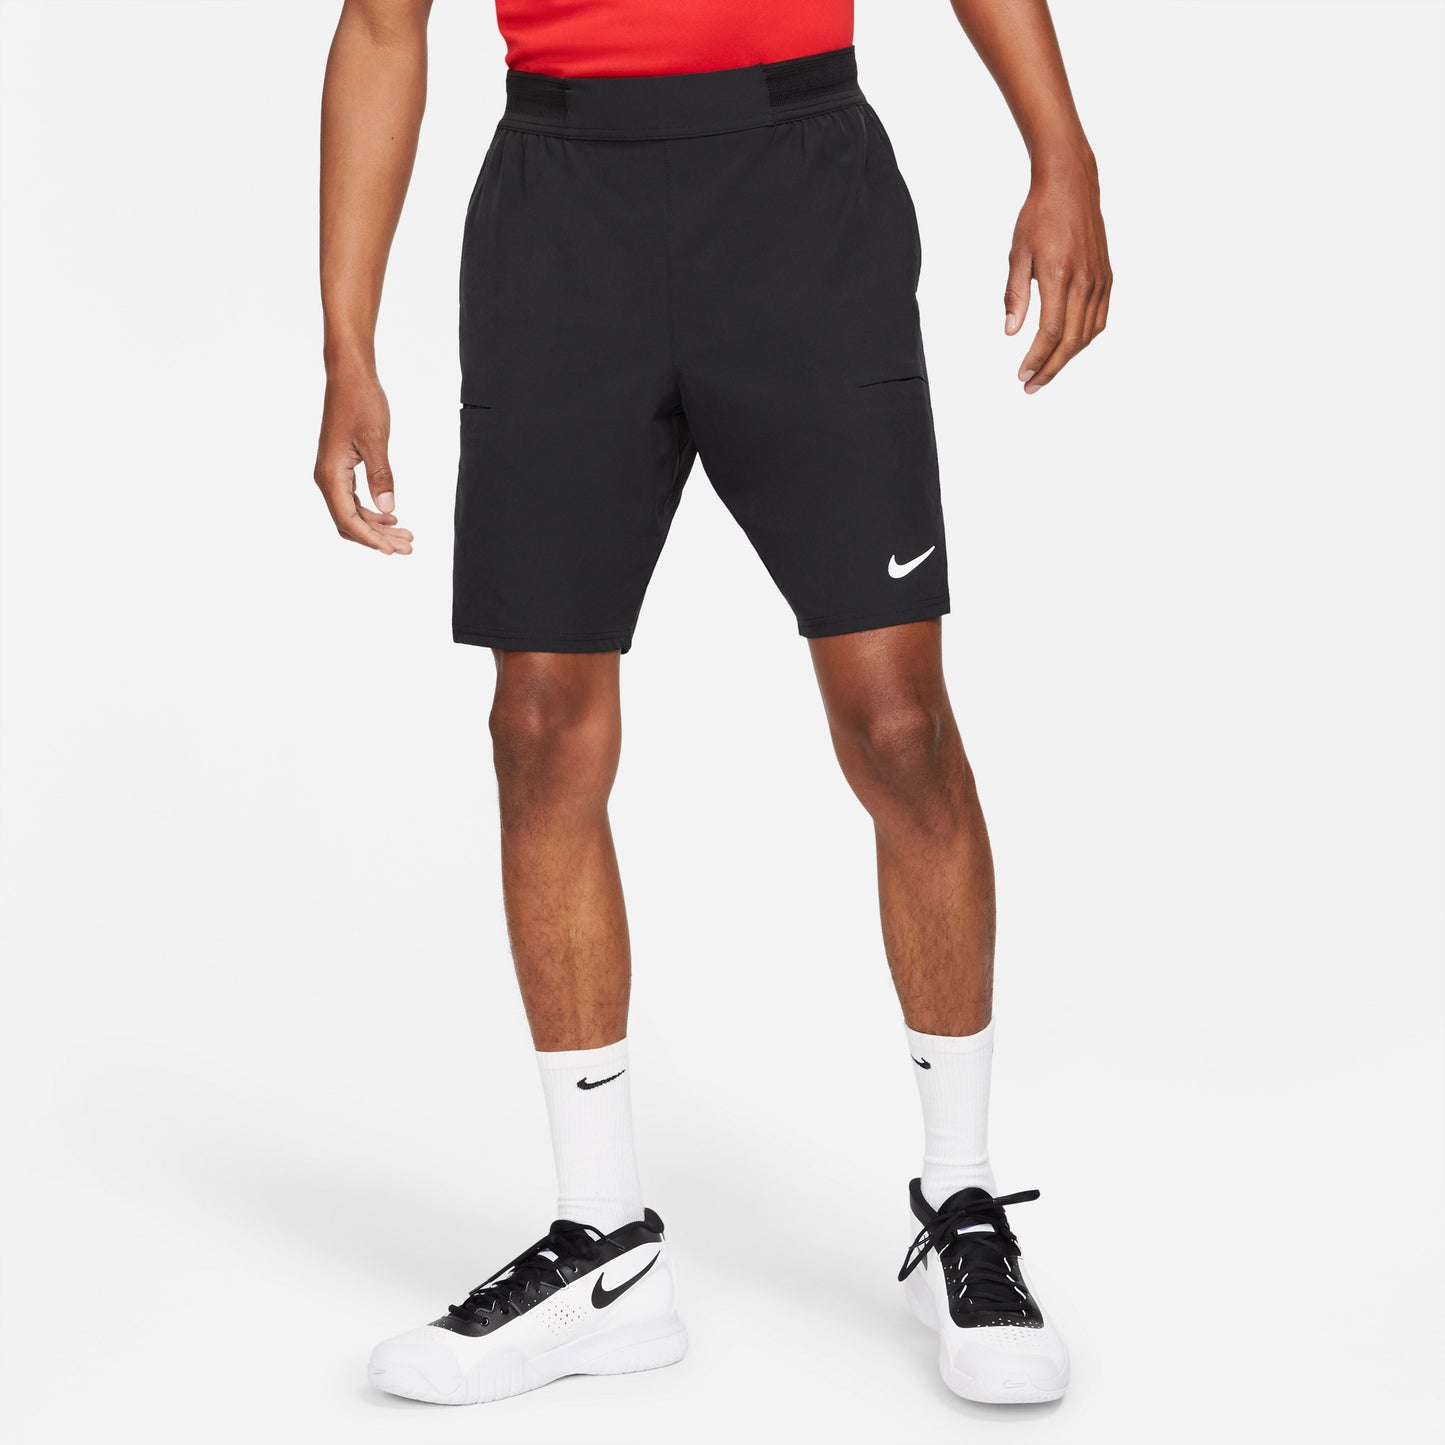 Nike Flex Advantage Men's 9-Inch Tennis Shorts Black (1)